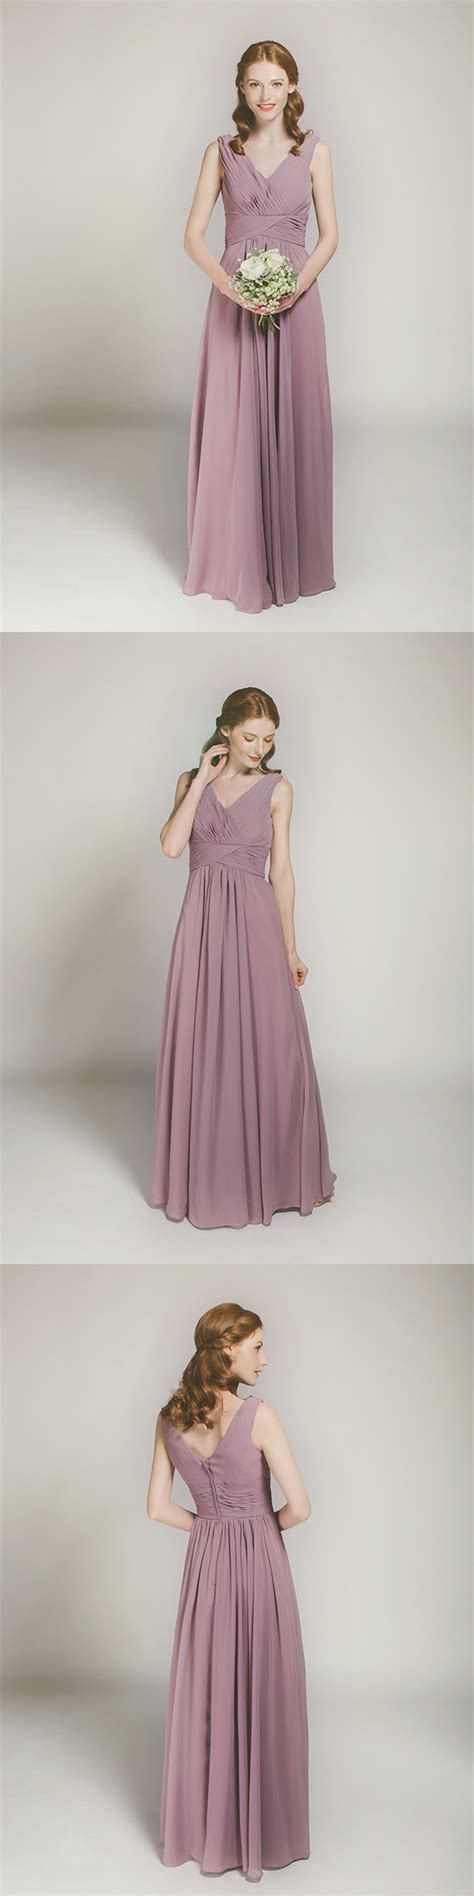 Long Chiffon Mauve V Neck Bridesmaid Dress For Purple Weddings